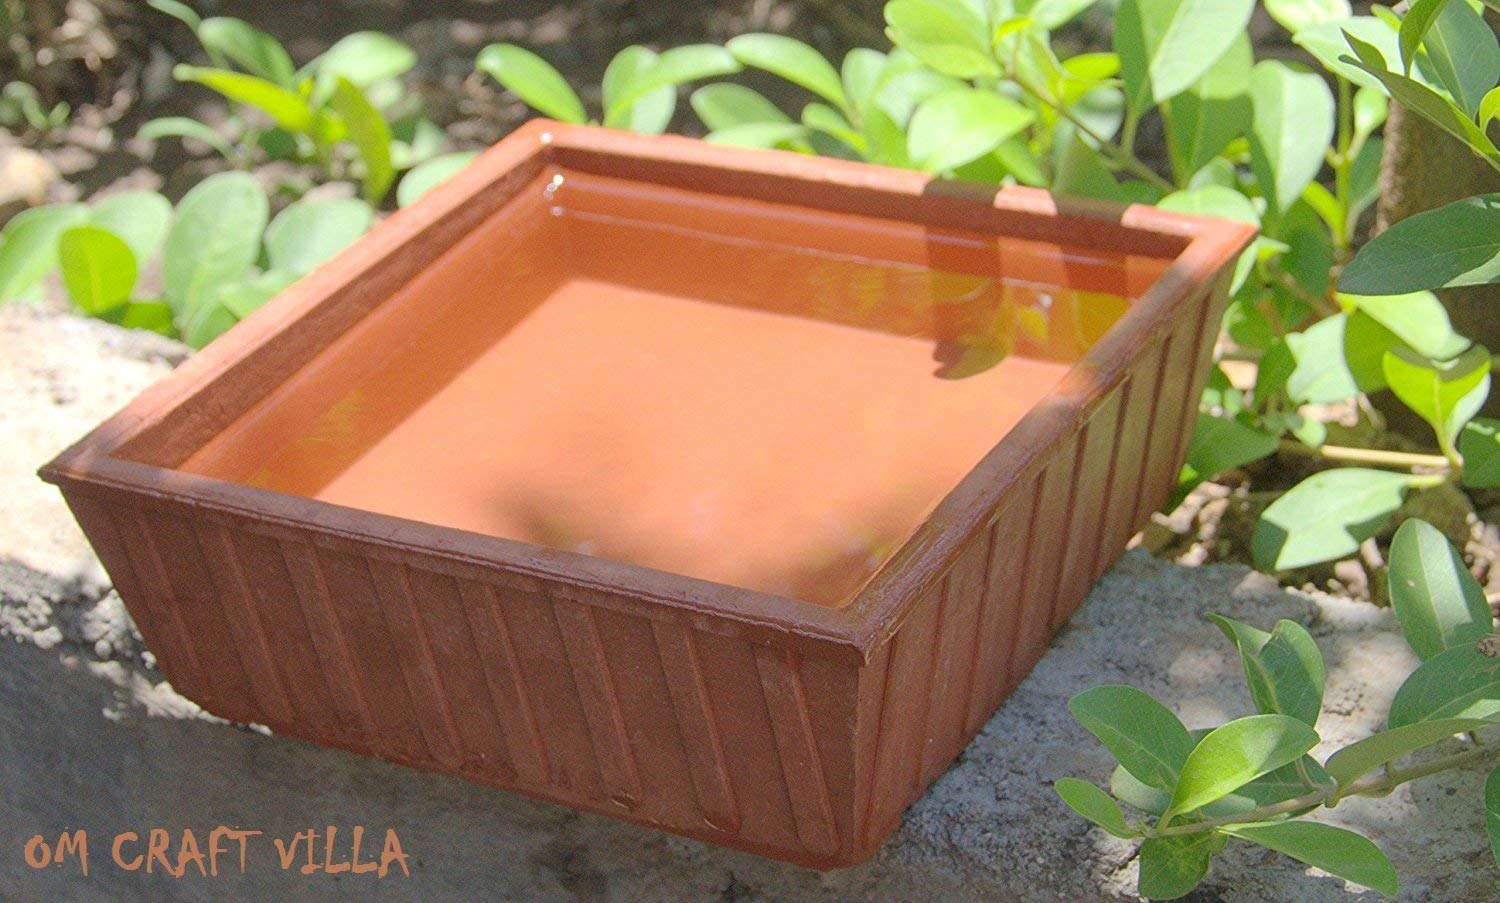 Om Craft Villa Terracotta Square Bird Bath (8.66 inches)